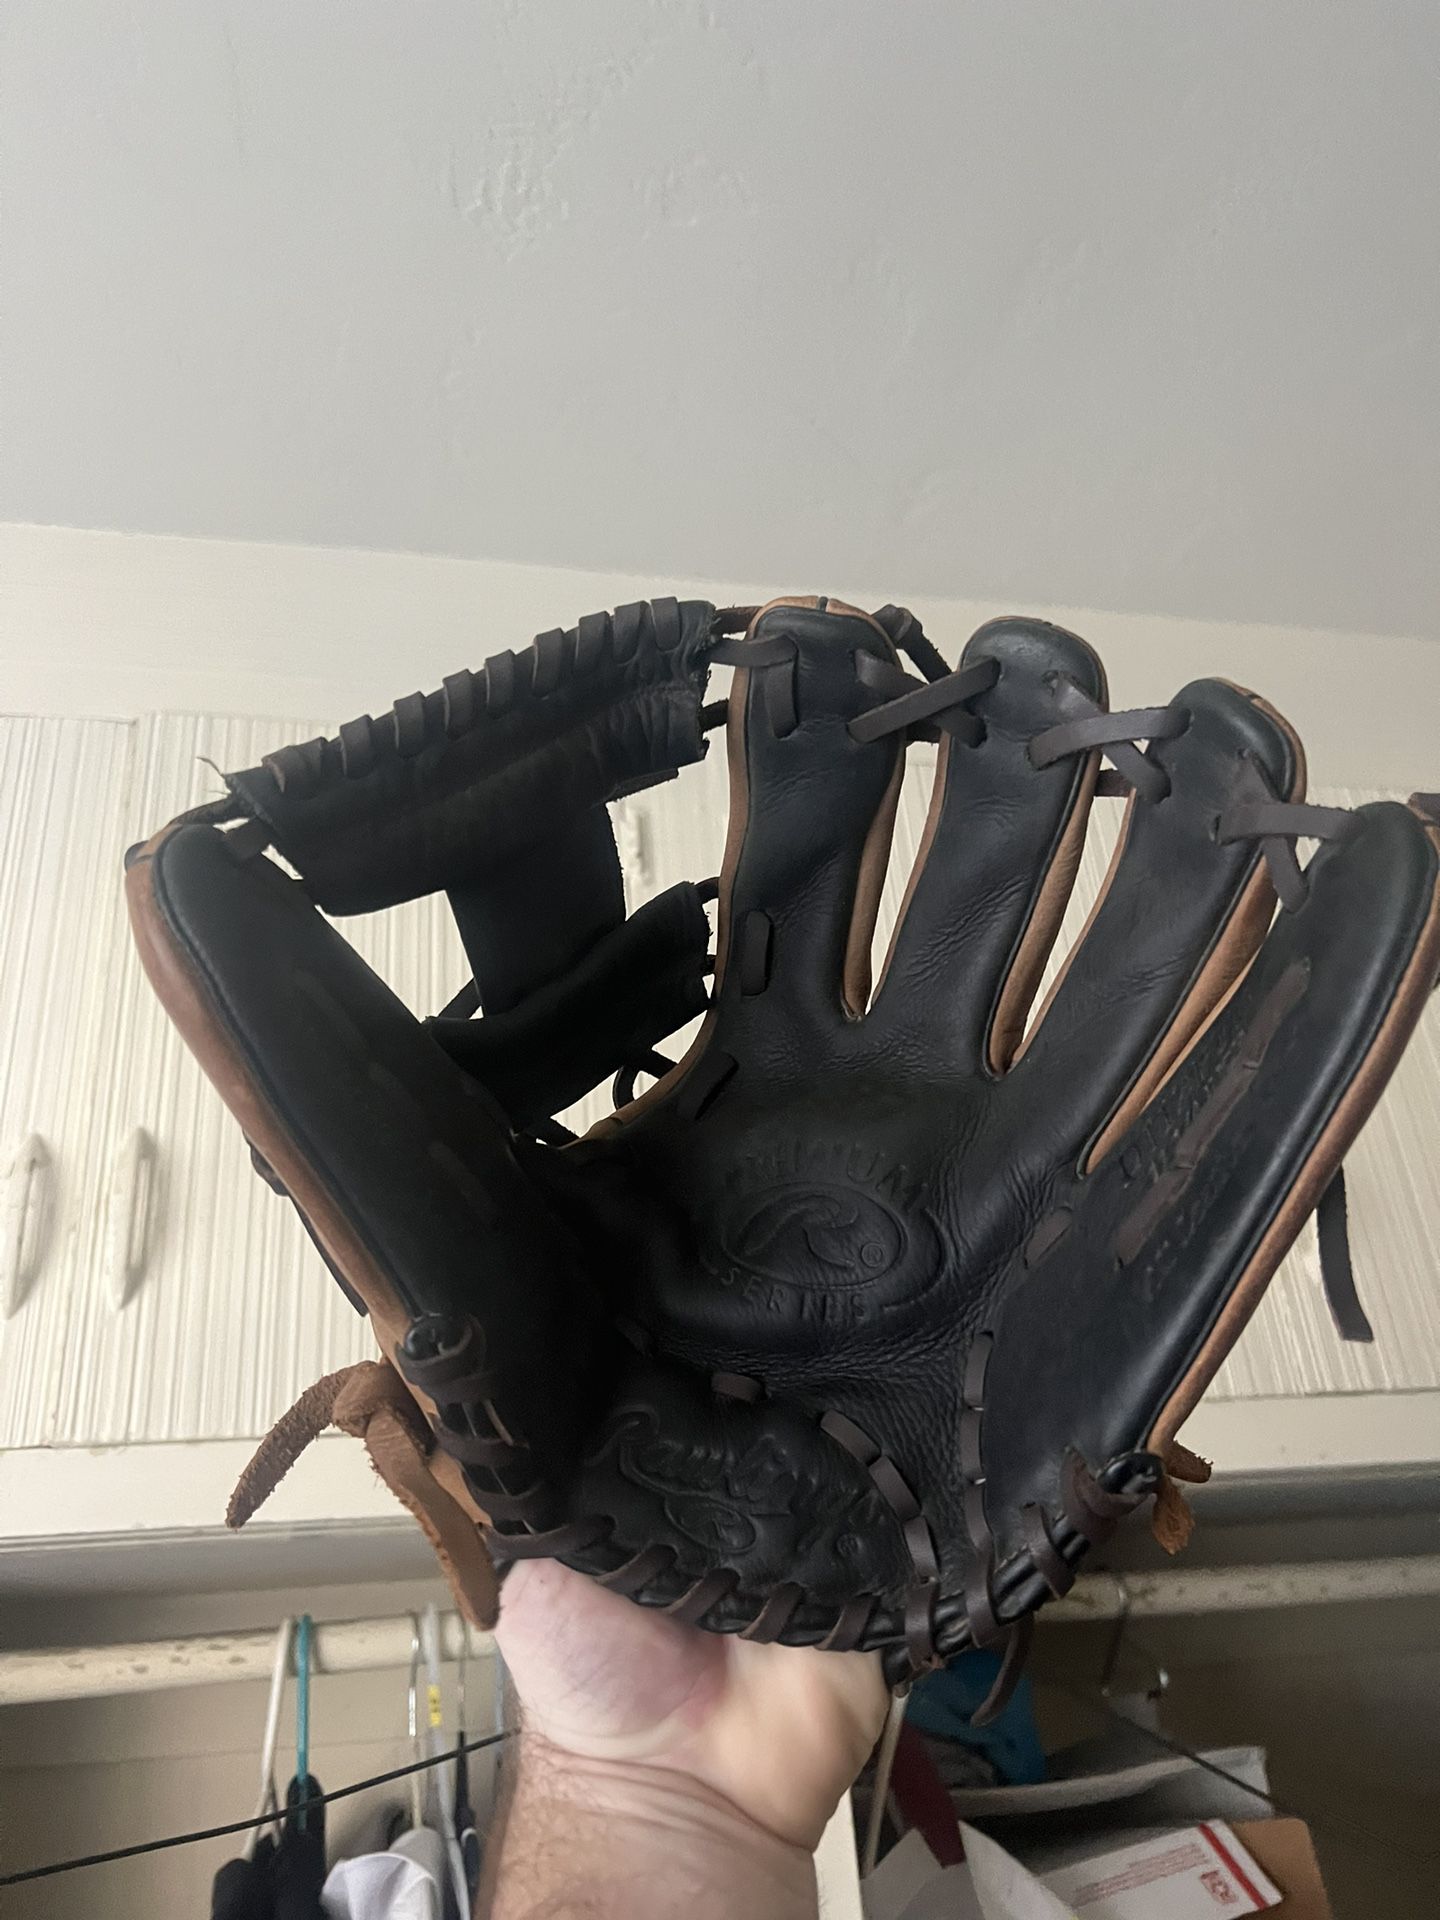 RAWLINGS - D112PTB "Premium Series" - Genuine Leather - 11.25" - Black & Brown. Baseball Softball Glove